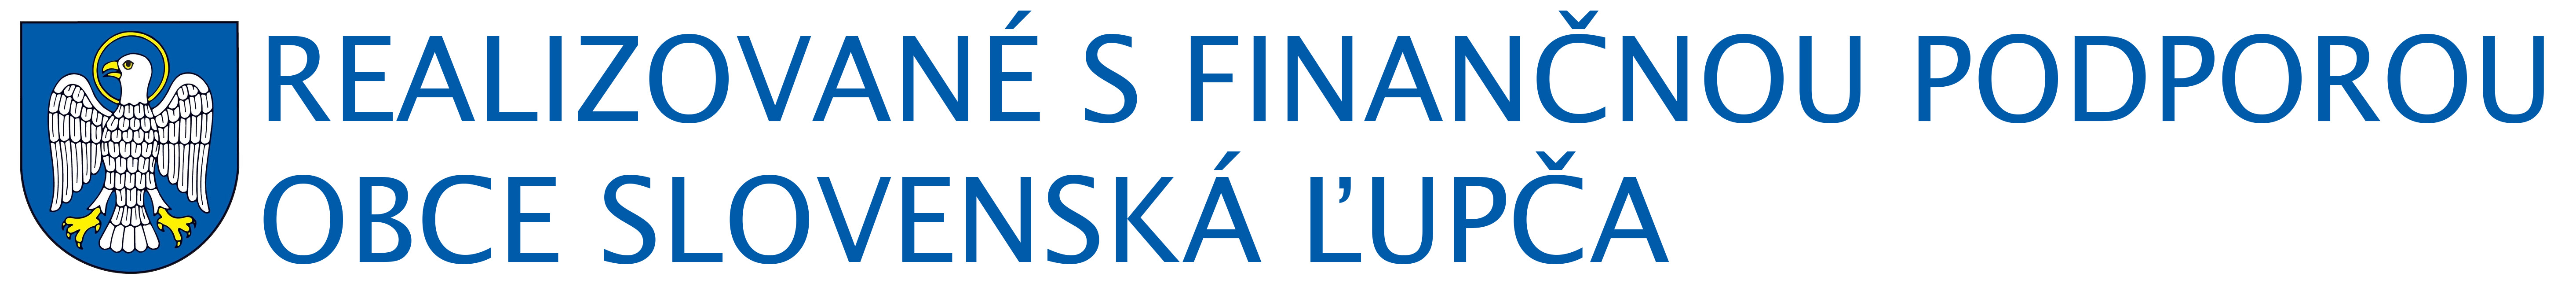 Logo s podporou obce Slovenská Ľupča - o poskytovaní dotácií z rozpočtu obce